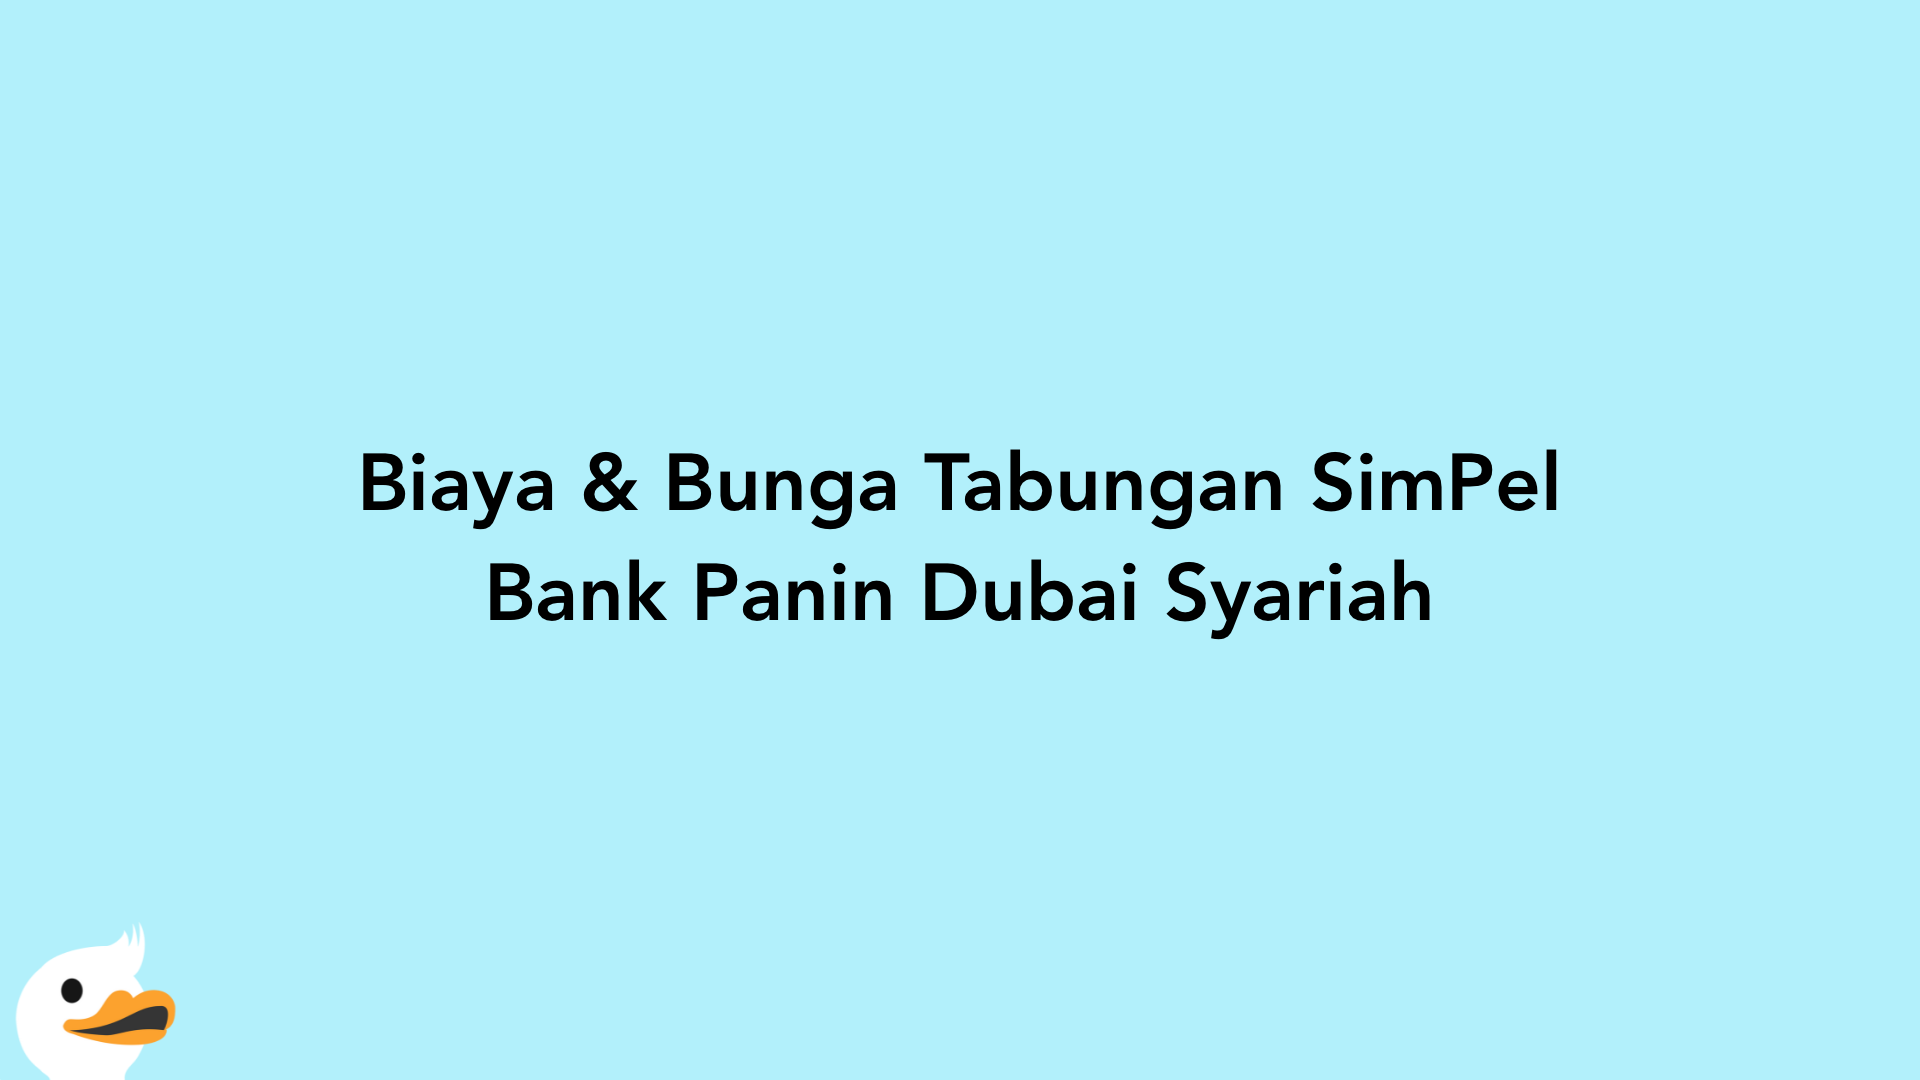 Biaya & Bunga Tabungan SimPel Bank Panin Dubai Syariah